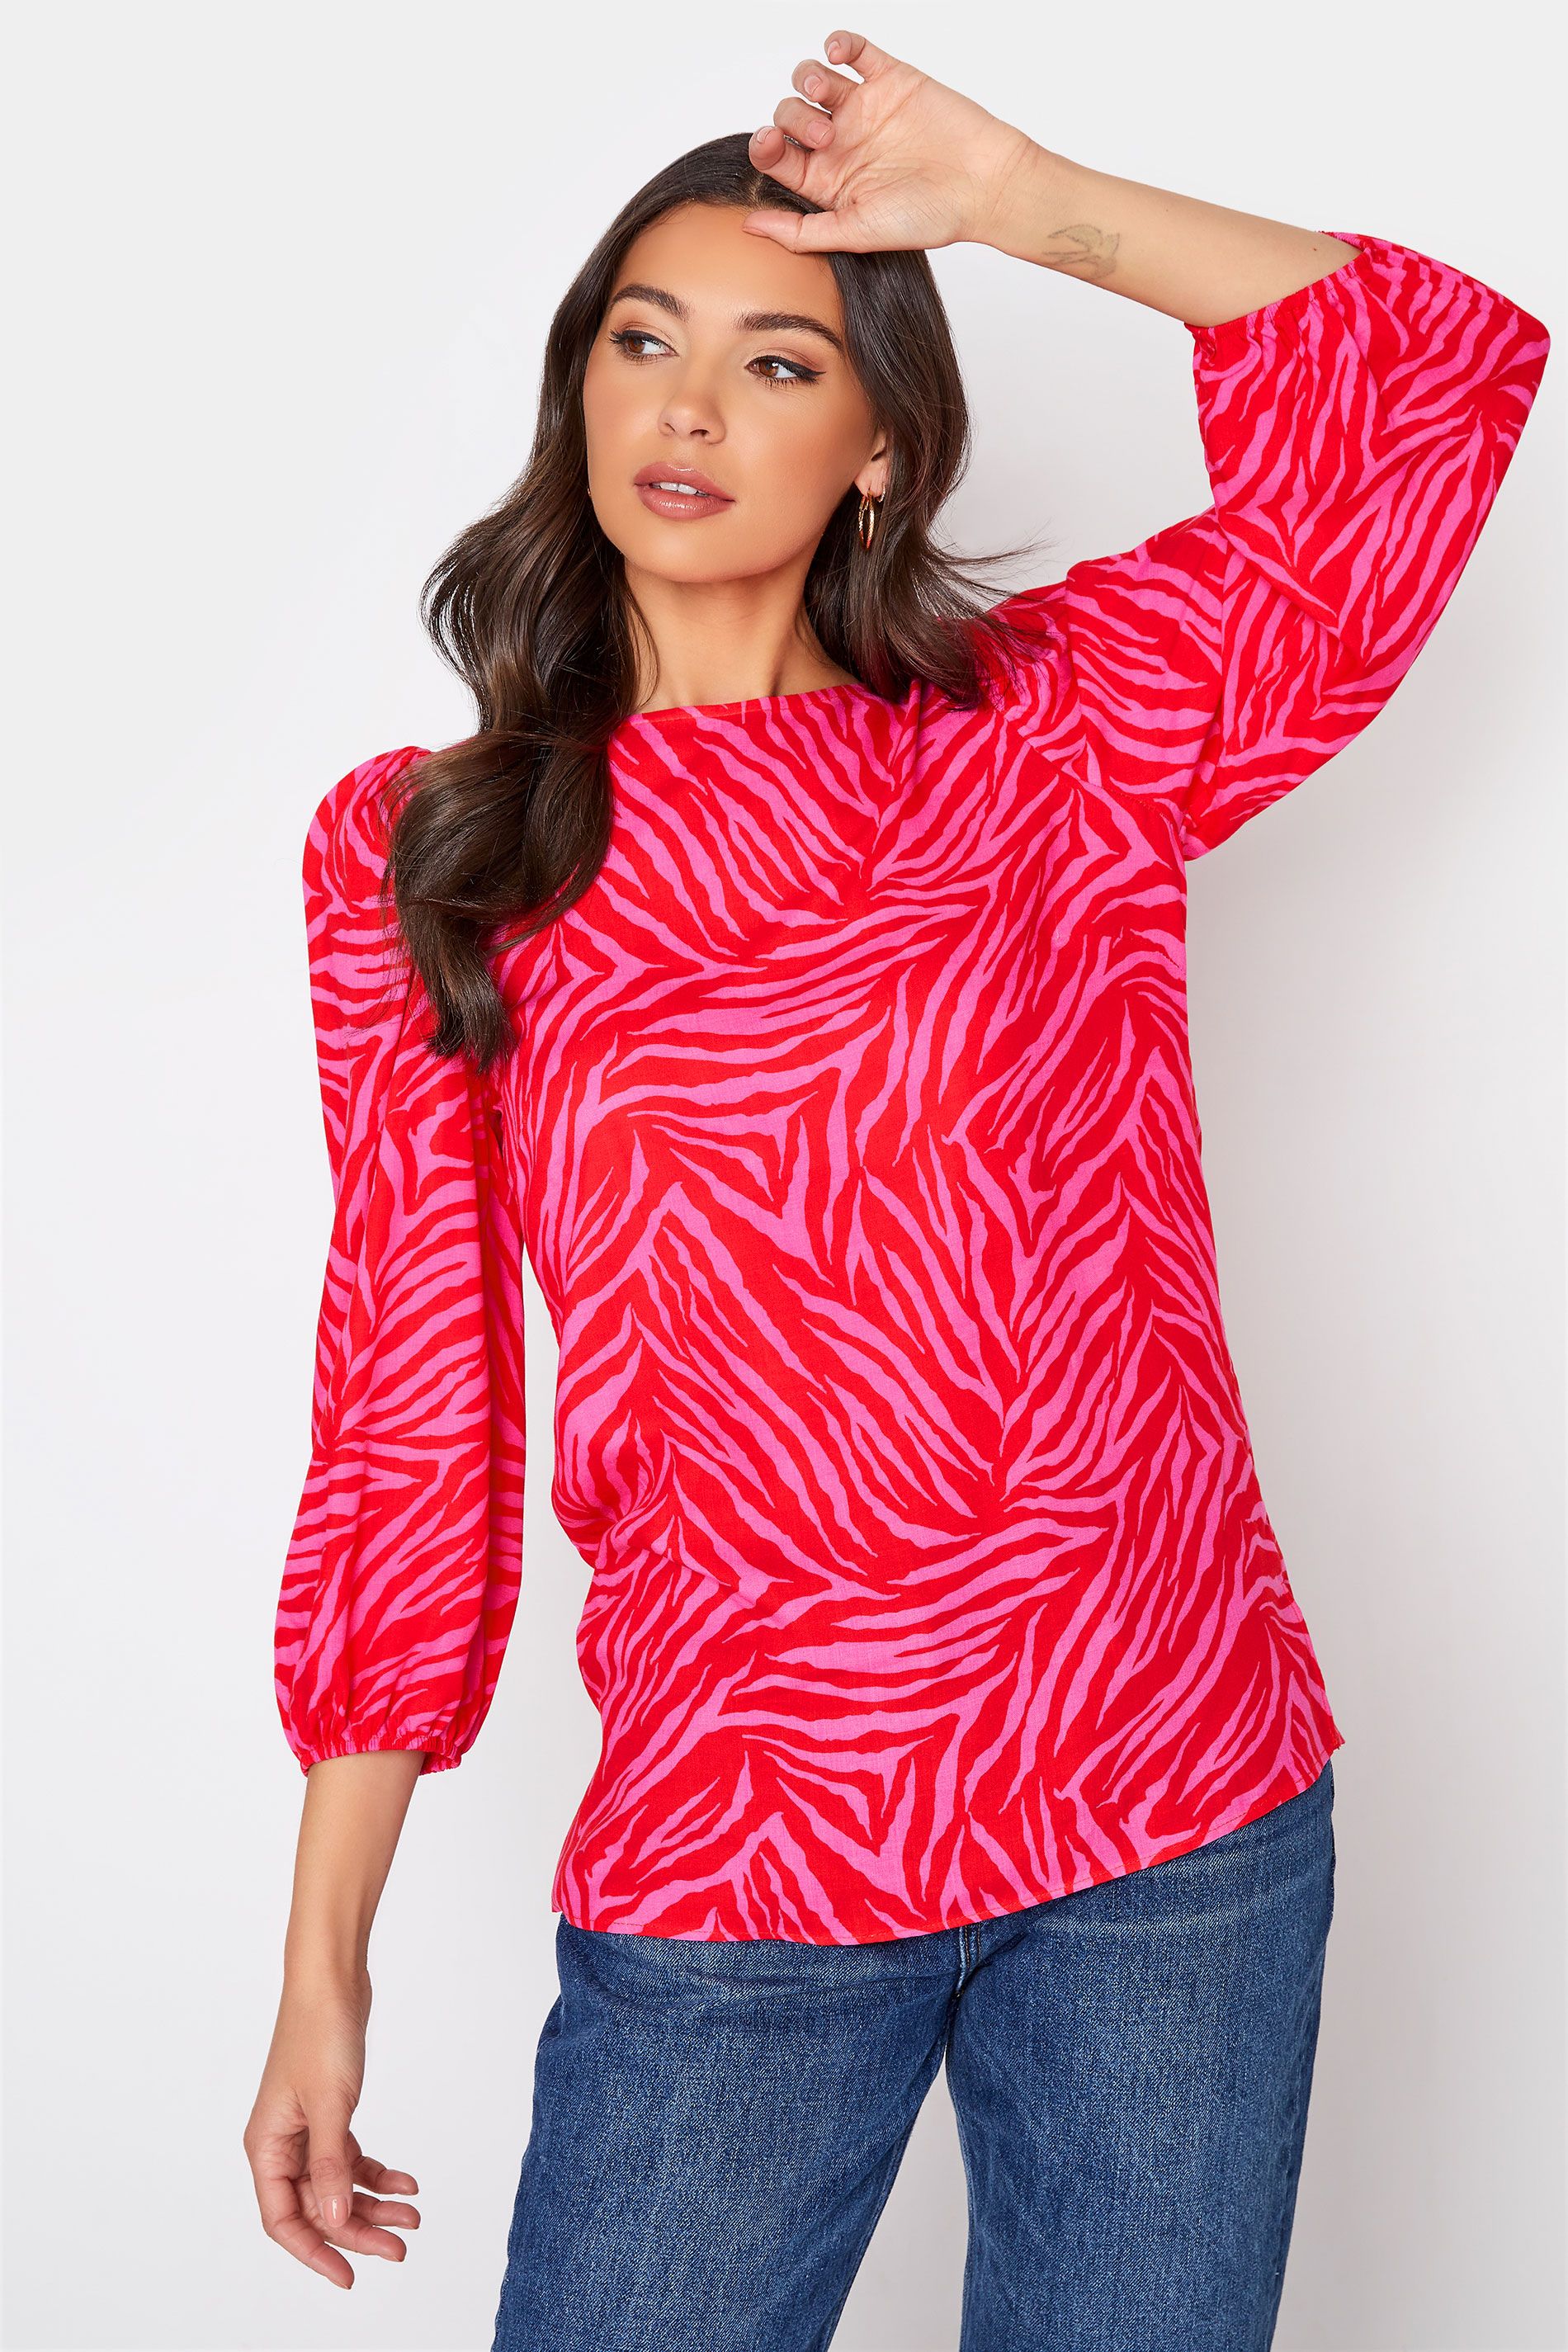 Tall Women's LTS Bright Pink Zebra Print Puff Sleeve Top | Long Tall Sally | Long Tall Sally